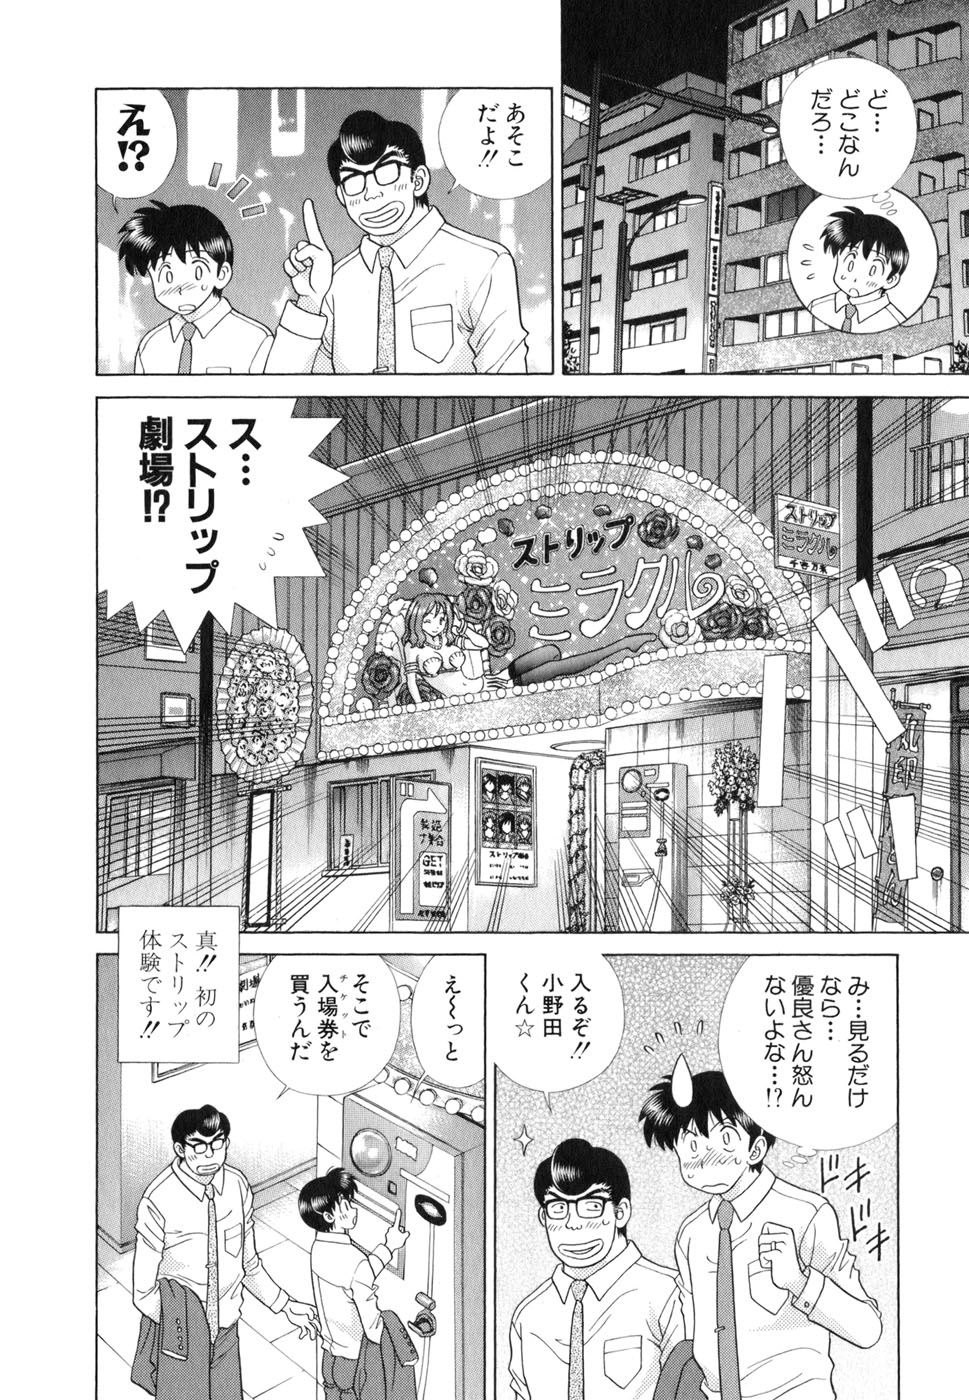 Katsu Aki Futari Ecchi Hentai Manga Read Free Hentai Xxx Manga Online